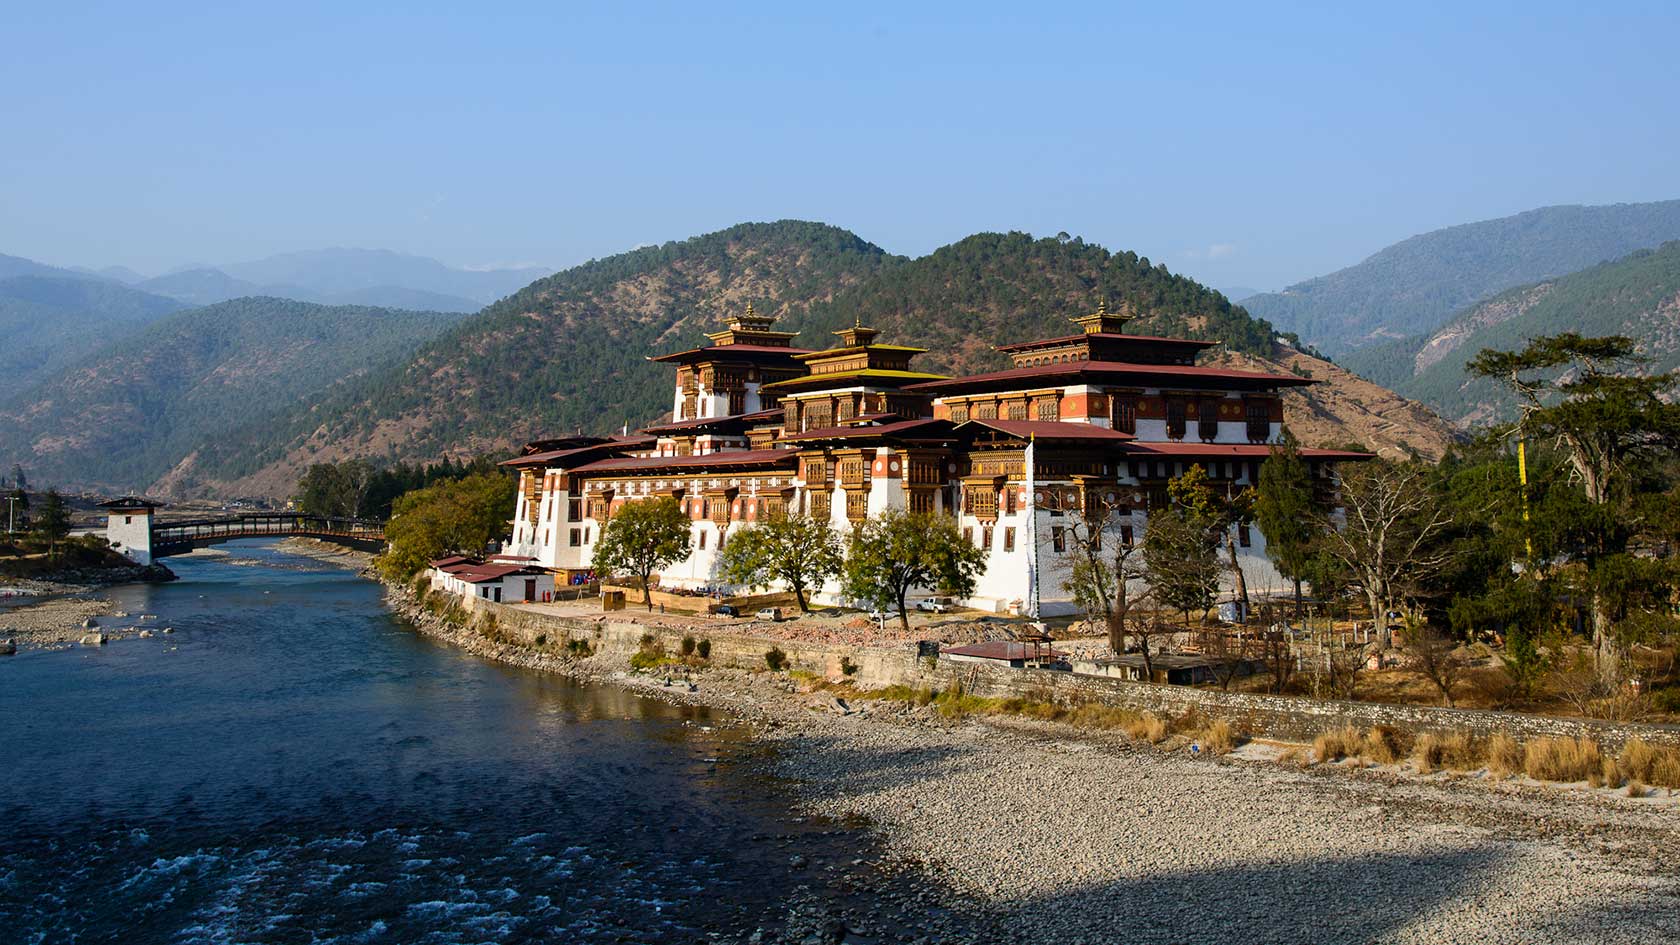 Bhutan Wallpaper for PC. Full HD Picture